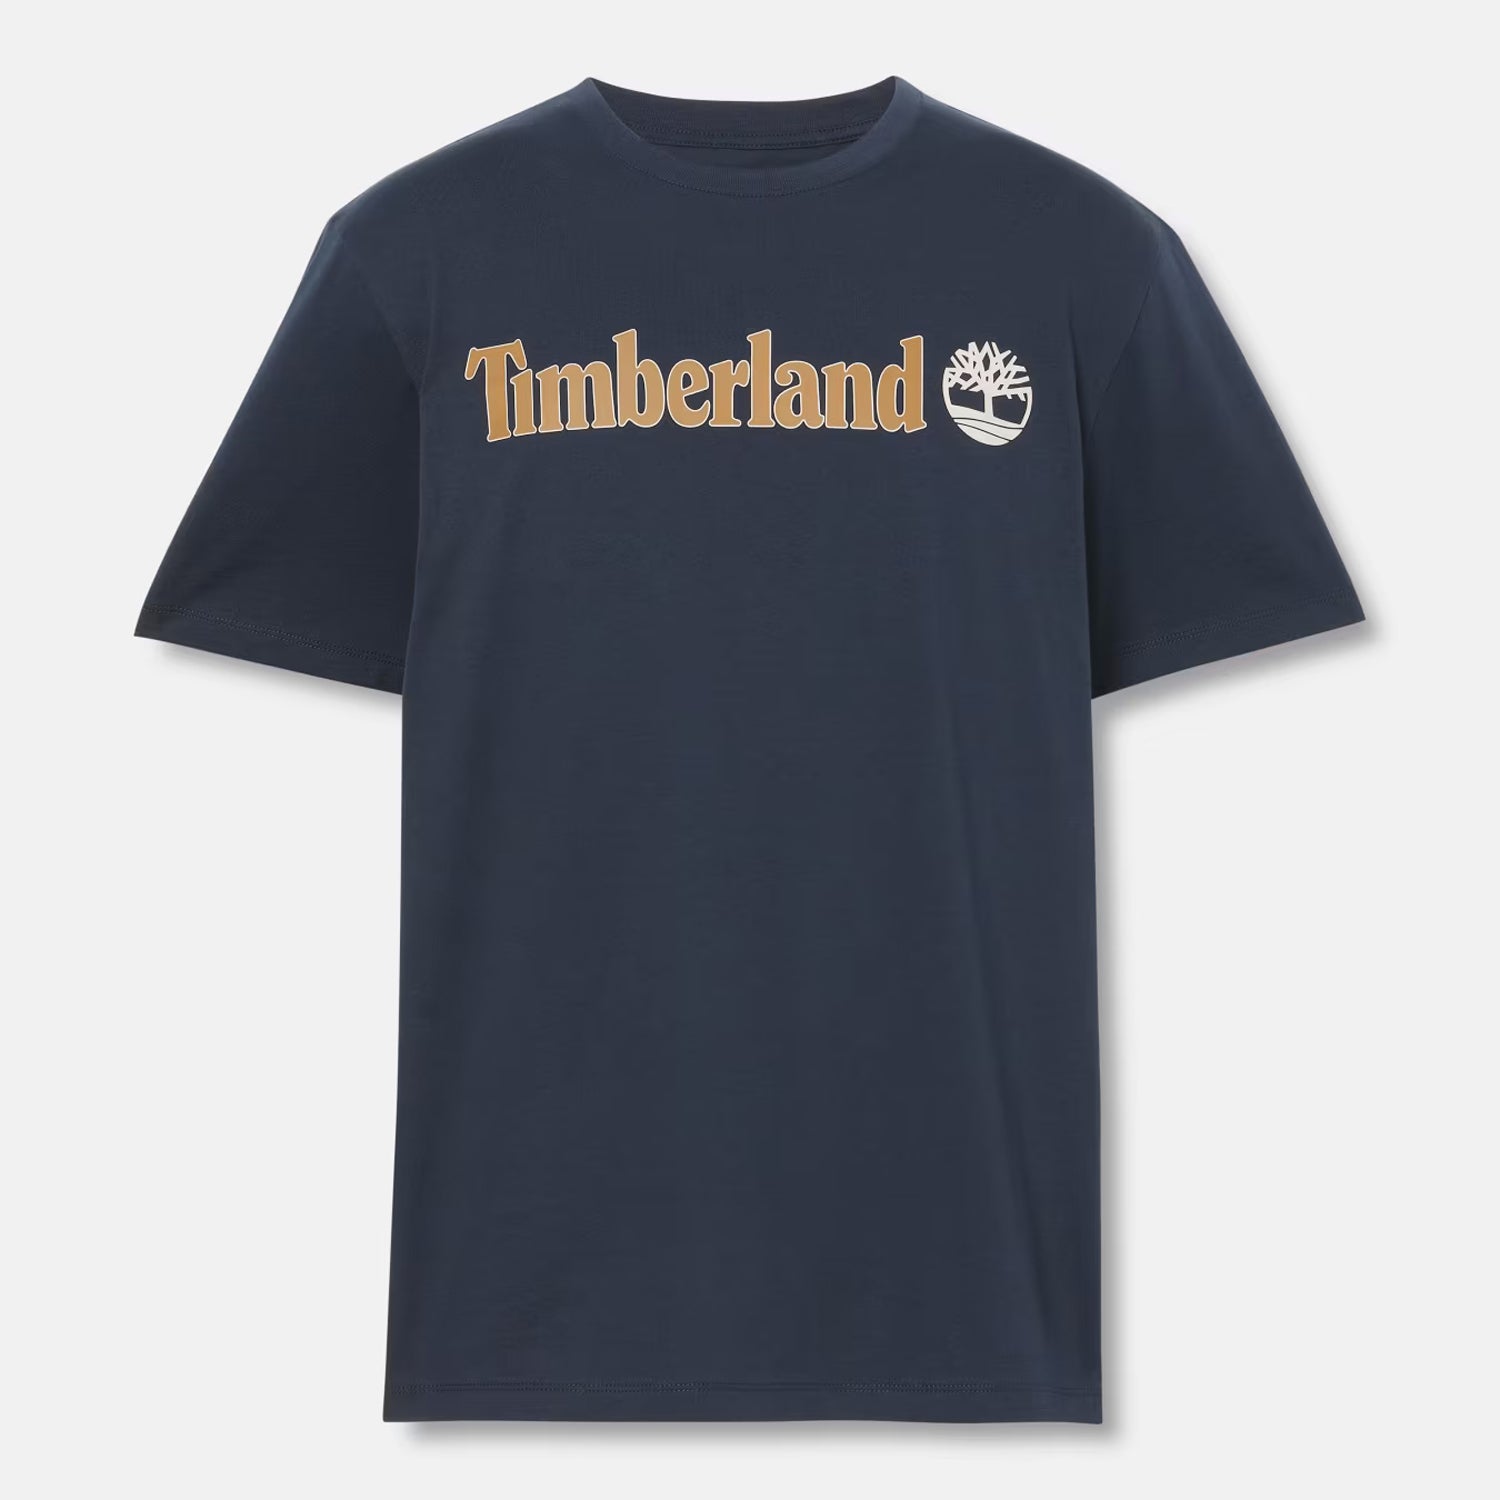 Timberland T Shirt Tb0a5upq Navy Navy_shot1